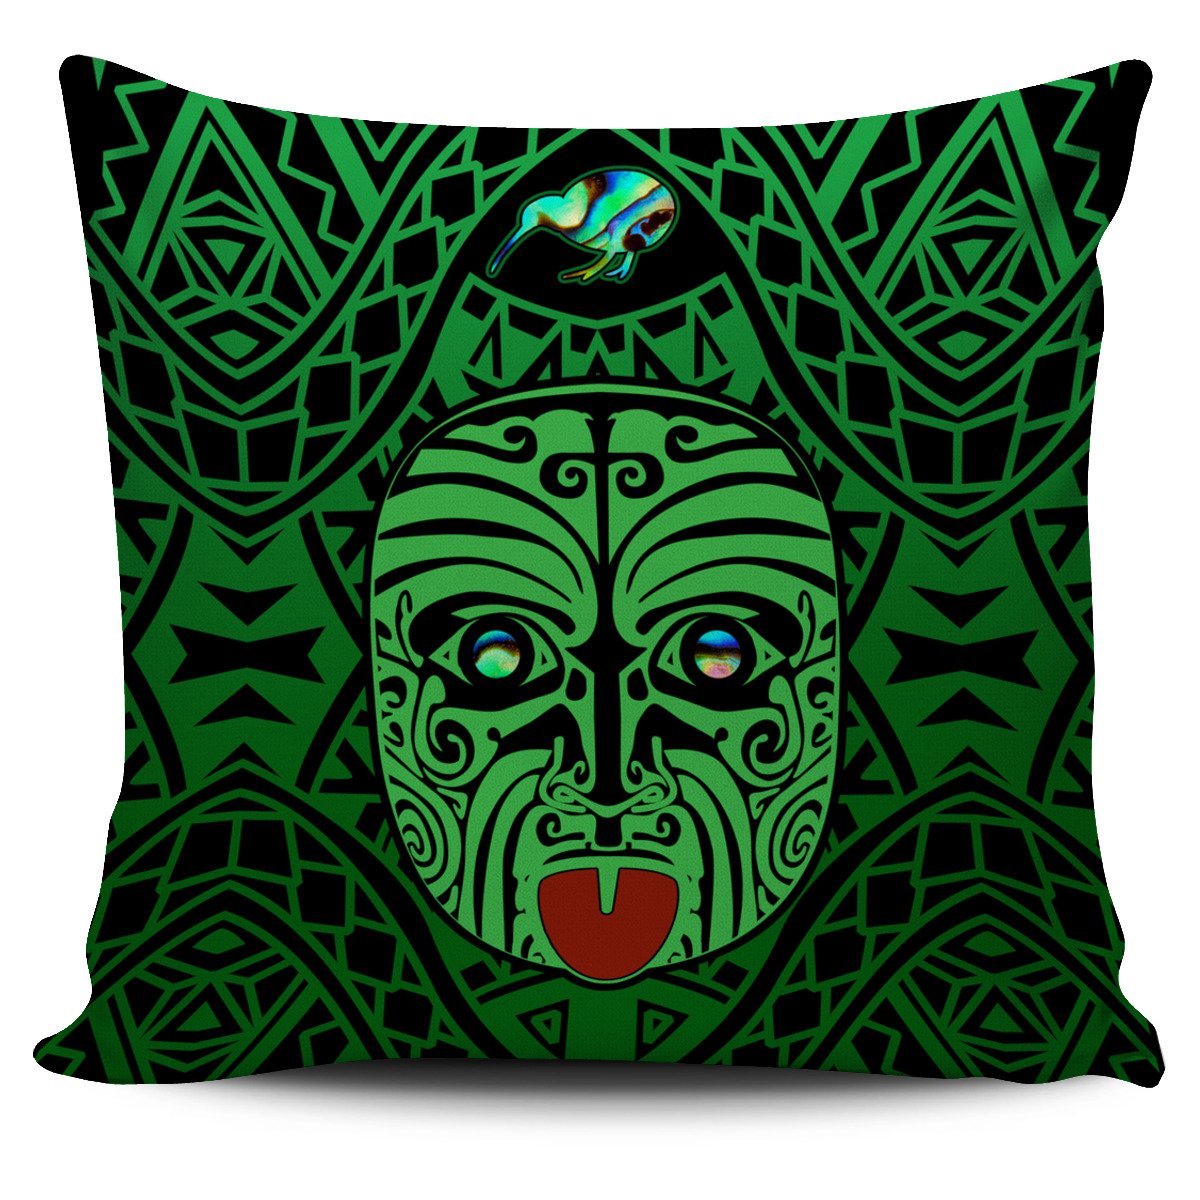 Integrity Maori Ta Moko Pillow Cover Kiwi and Paua Green Pillow Cover One Size - Polynesian Pride